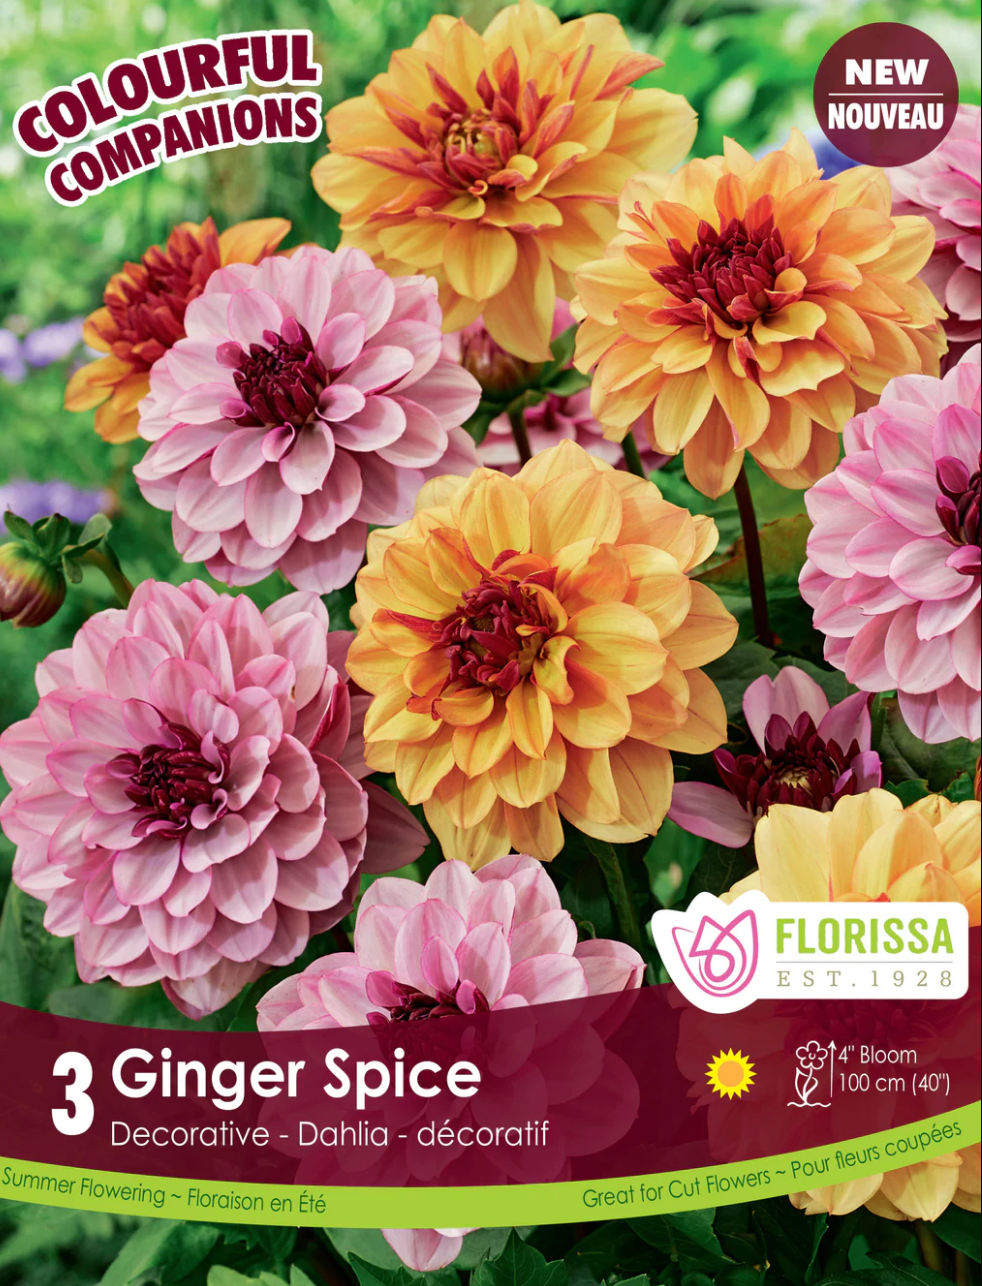 Ginger Spice Colourful Companion Dahlias